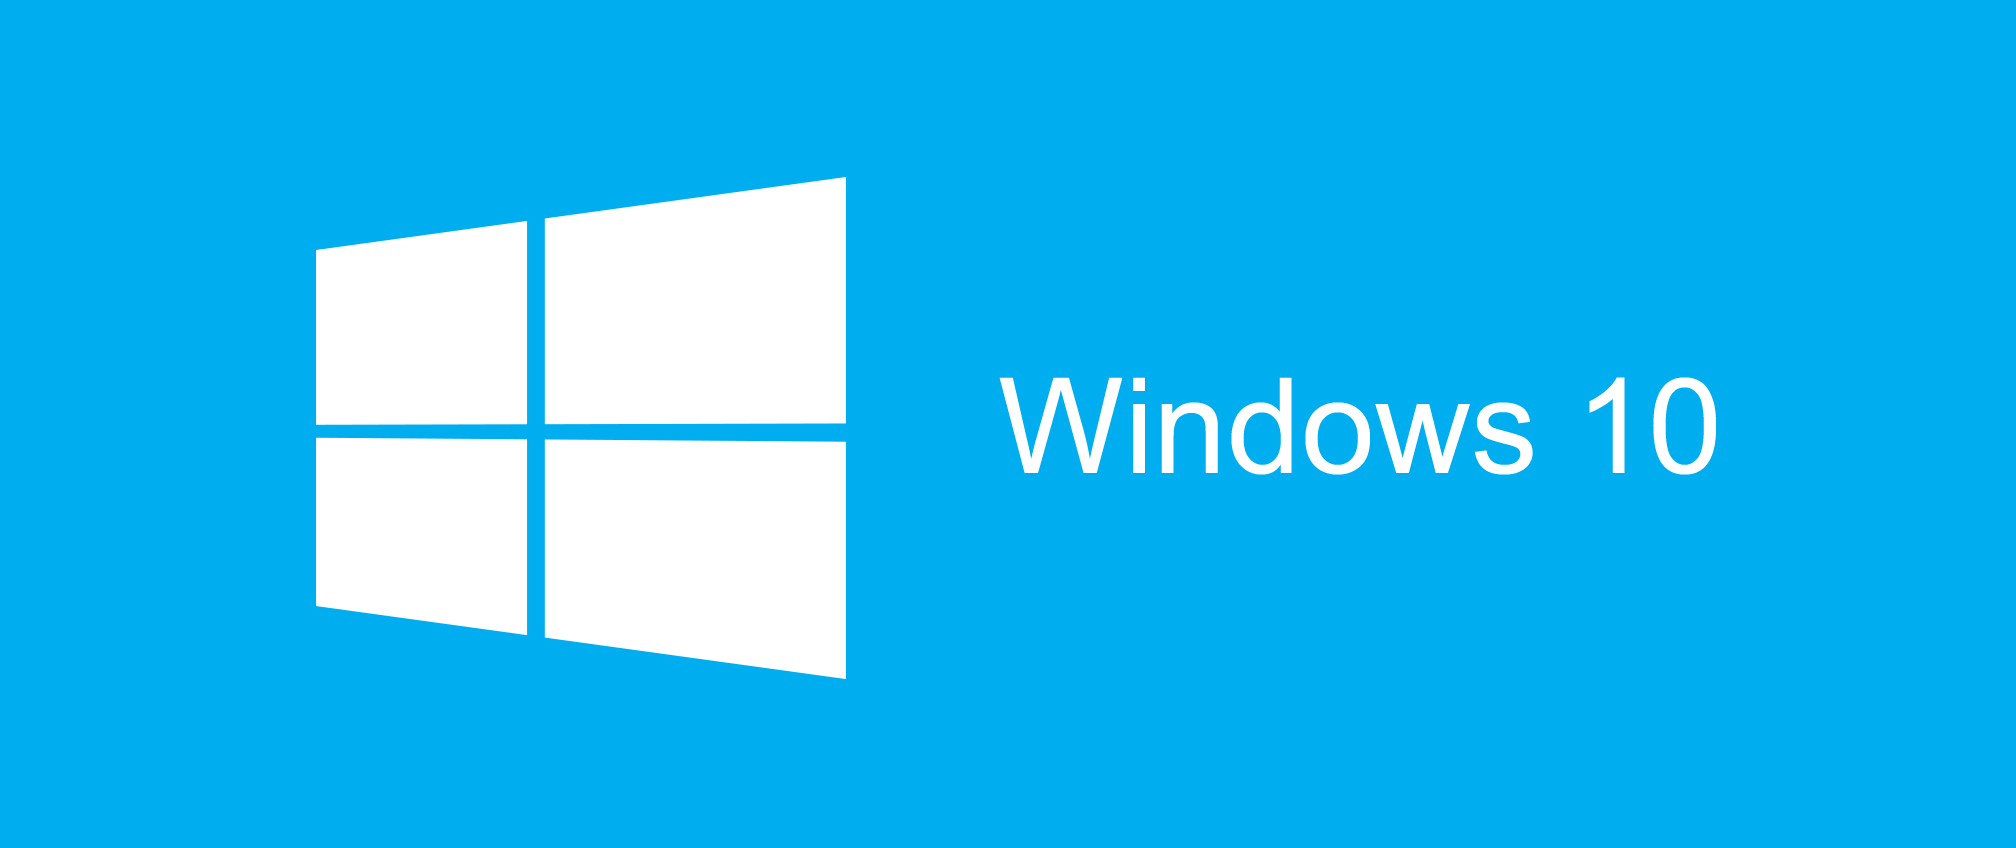 Windows 10 Logo Vector At Collection Of Windows 10